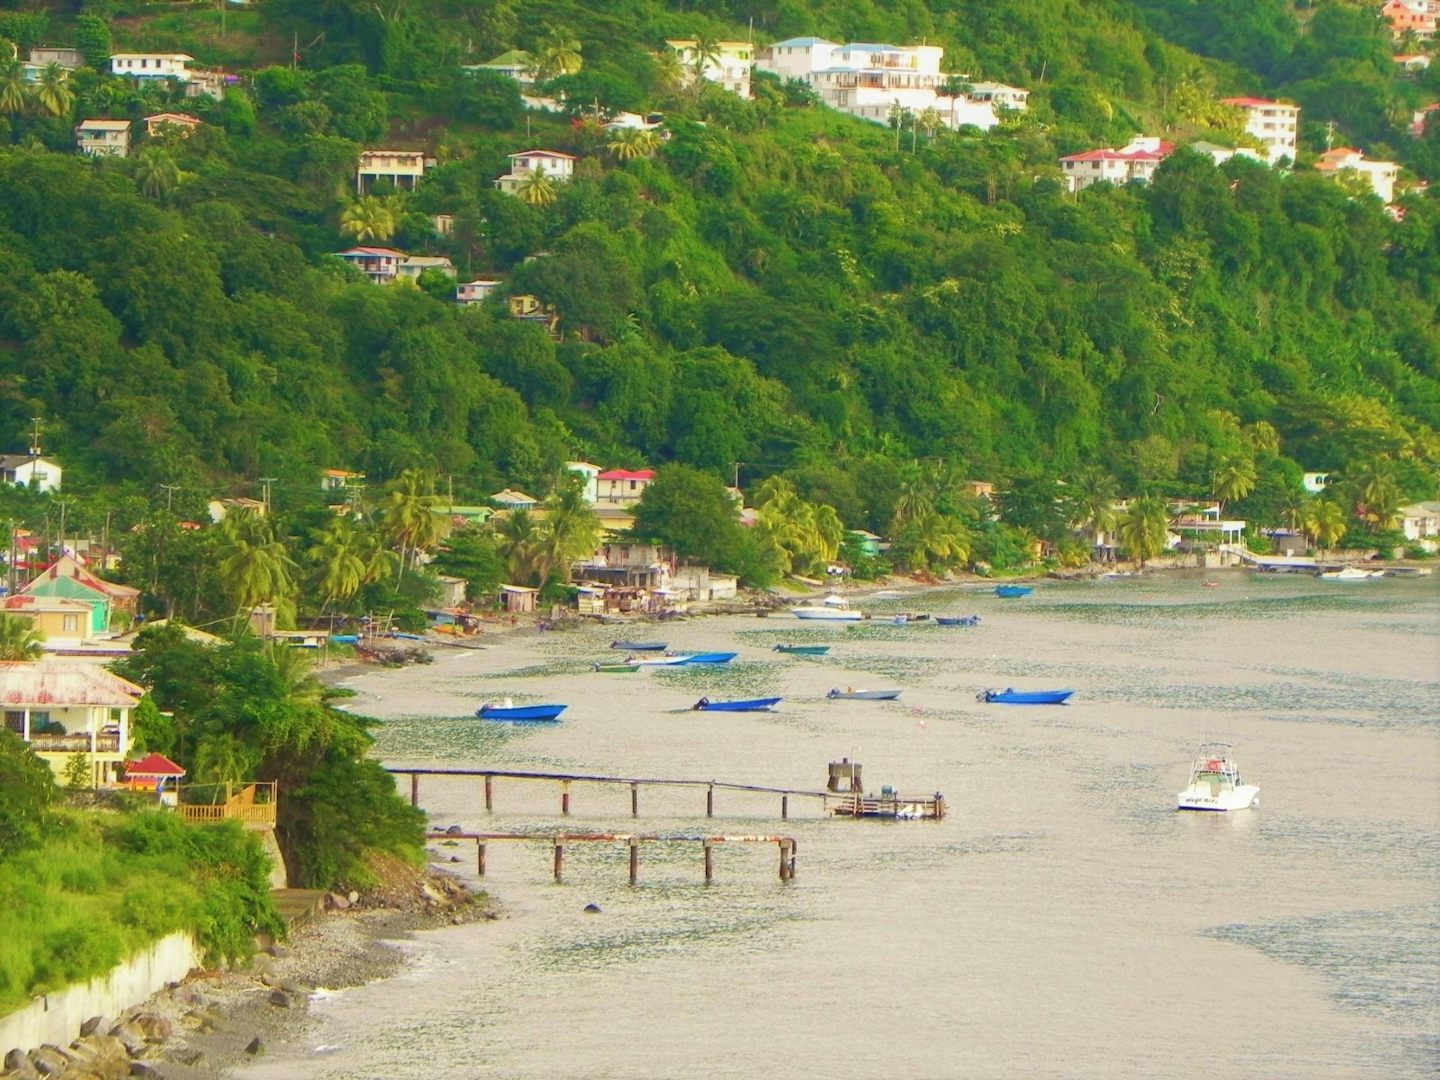 St Lucia coastline